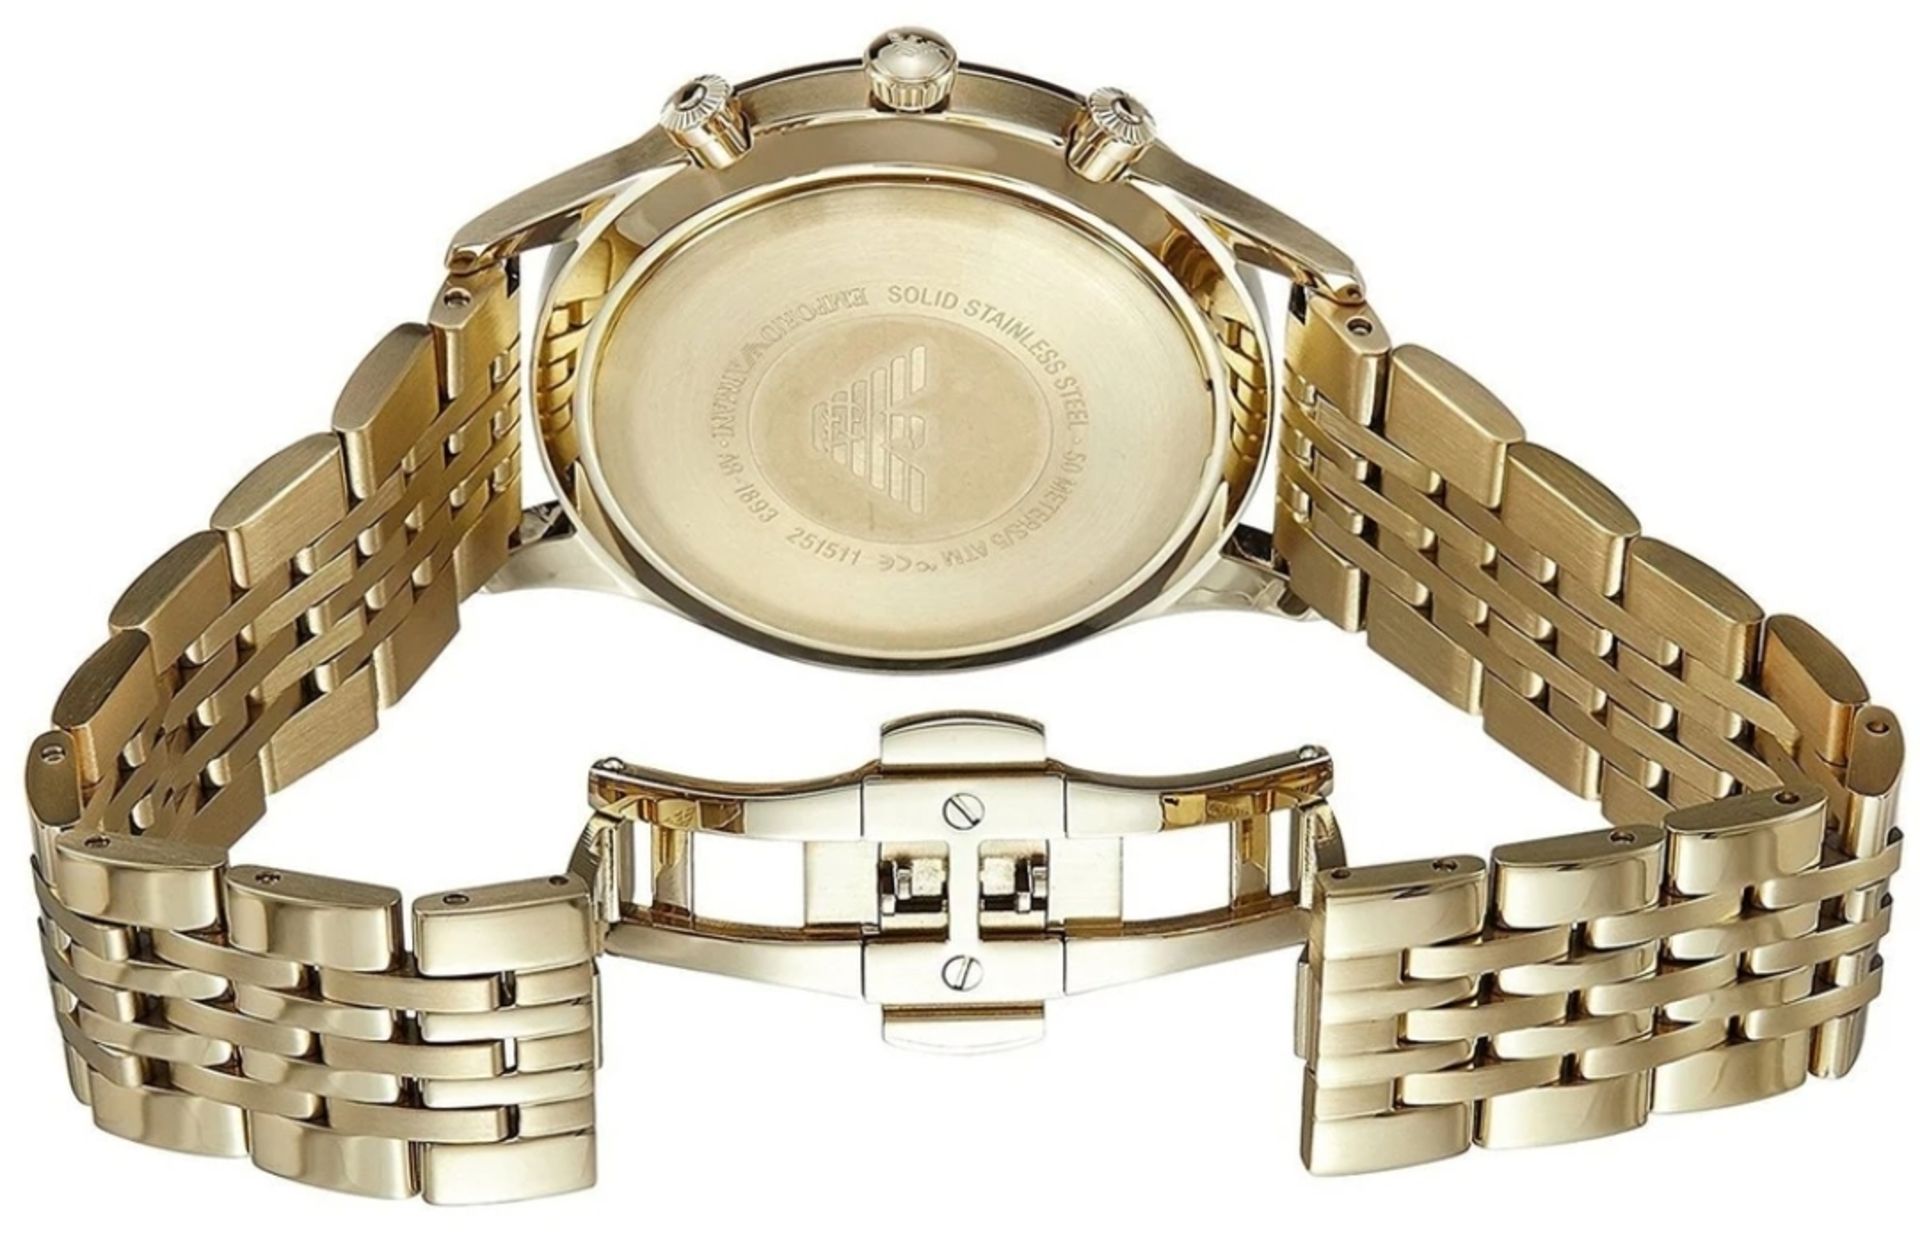 Emporio Armani AR1893 Men's Black Dial Gold Tone Bracelet Quartz Chronograph Watch - Image 5 of 8